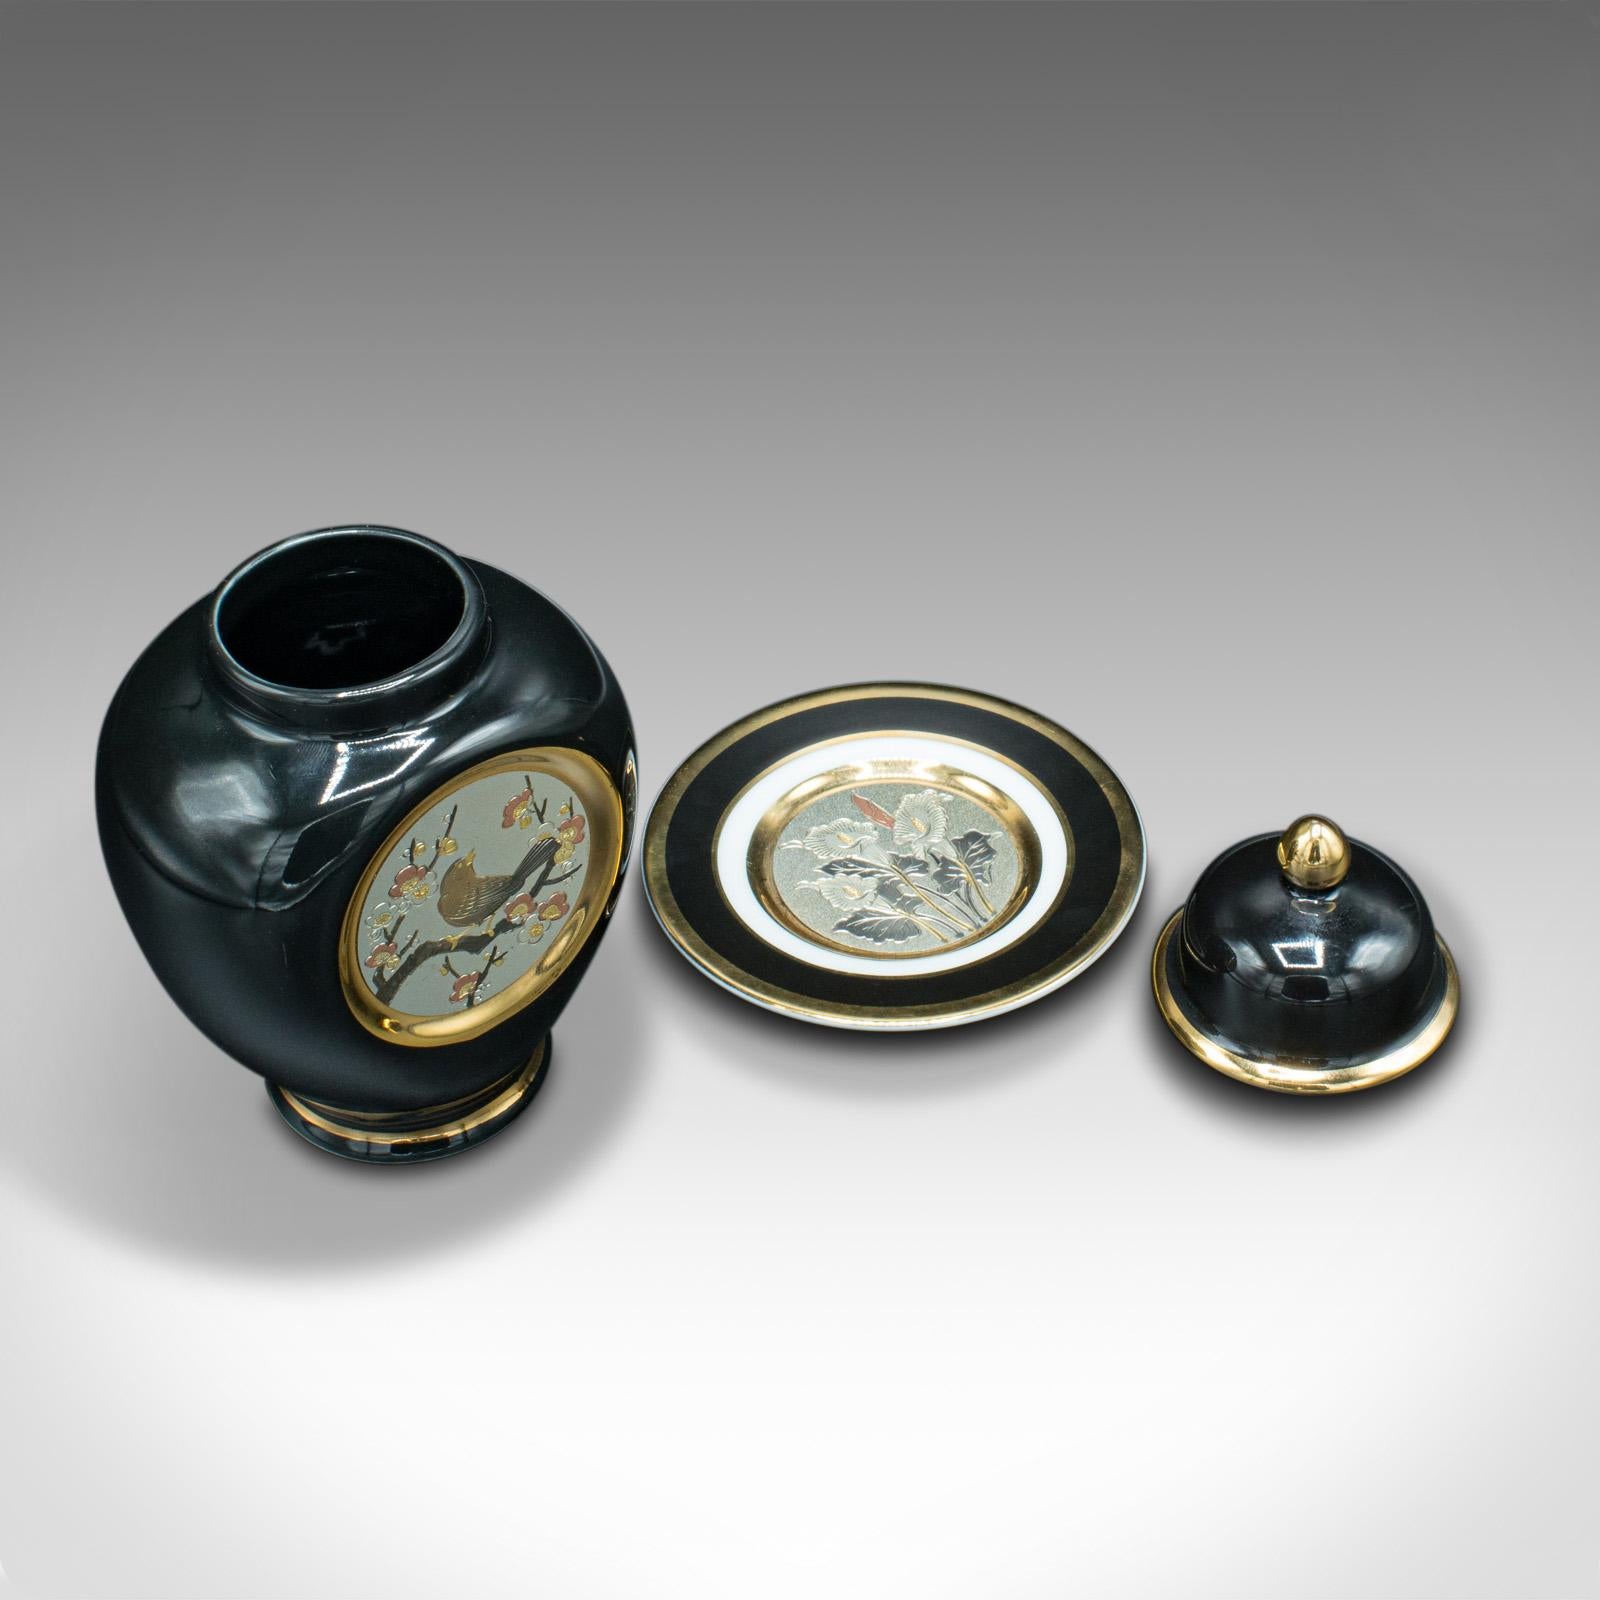 Small Vintage Decorative Spice Jar, Japanese, Ceramic, Baluster Urn, Coaster For Sale 2